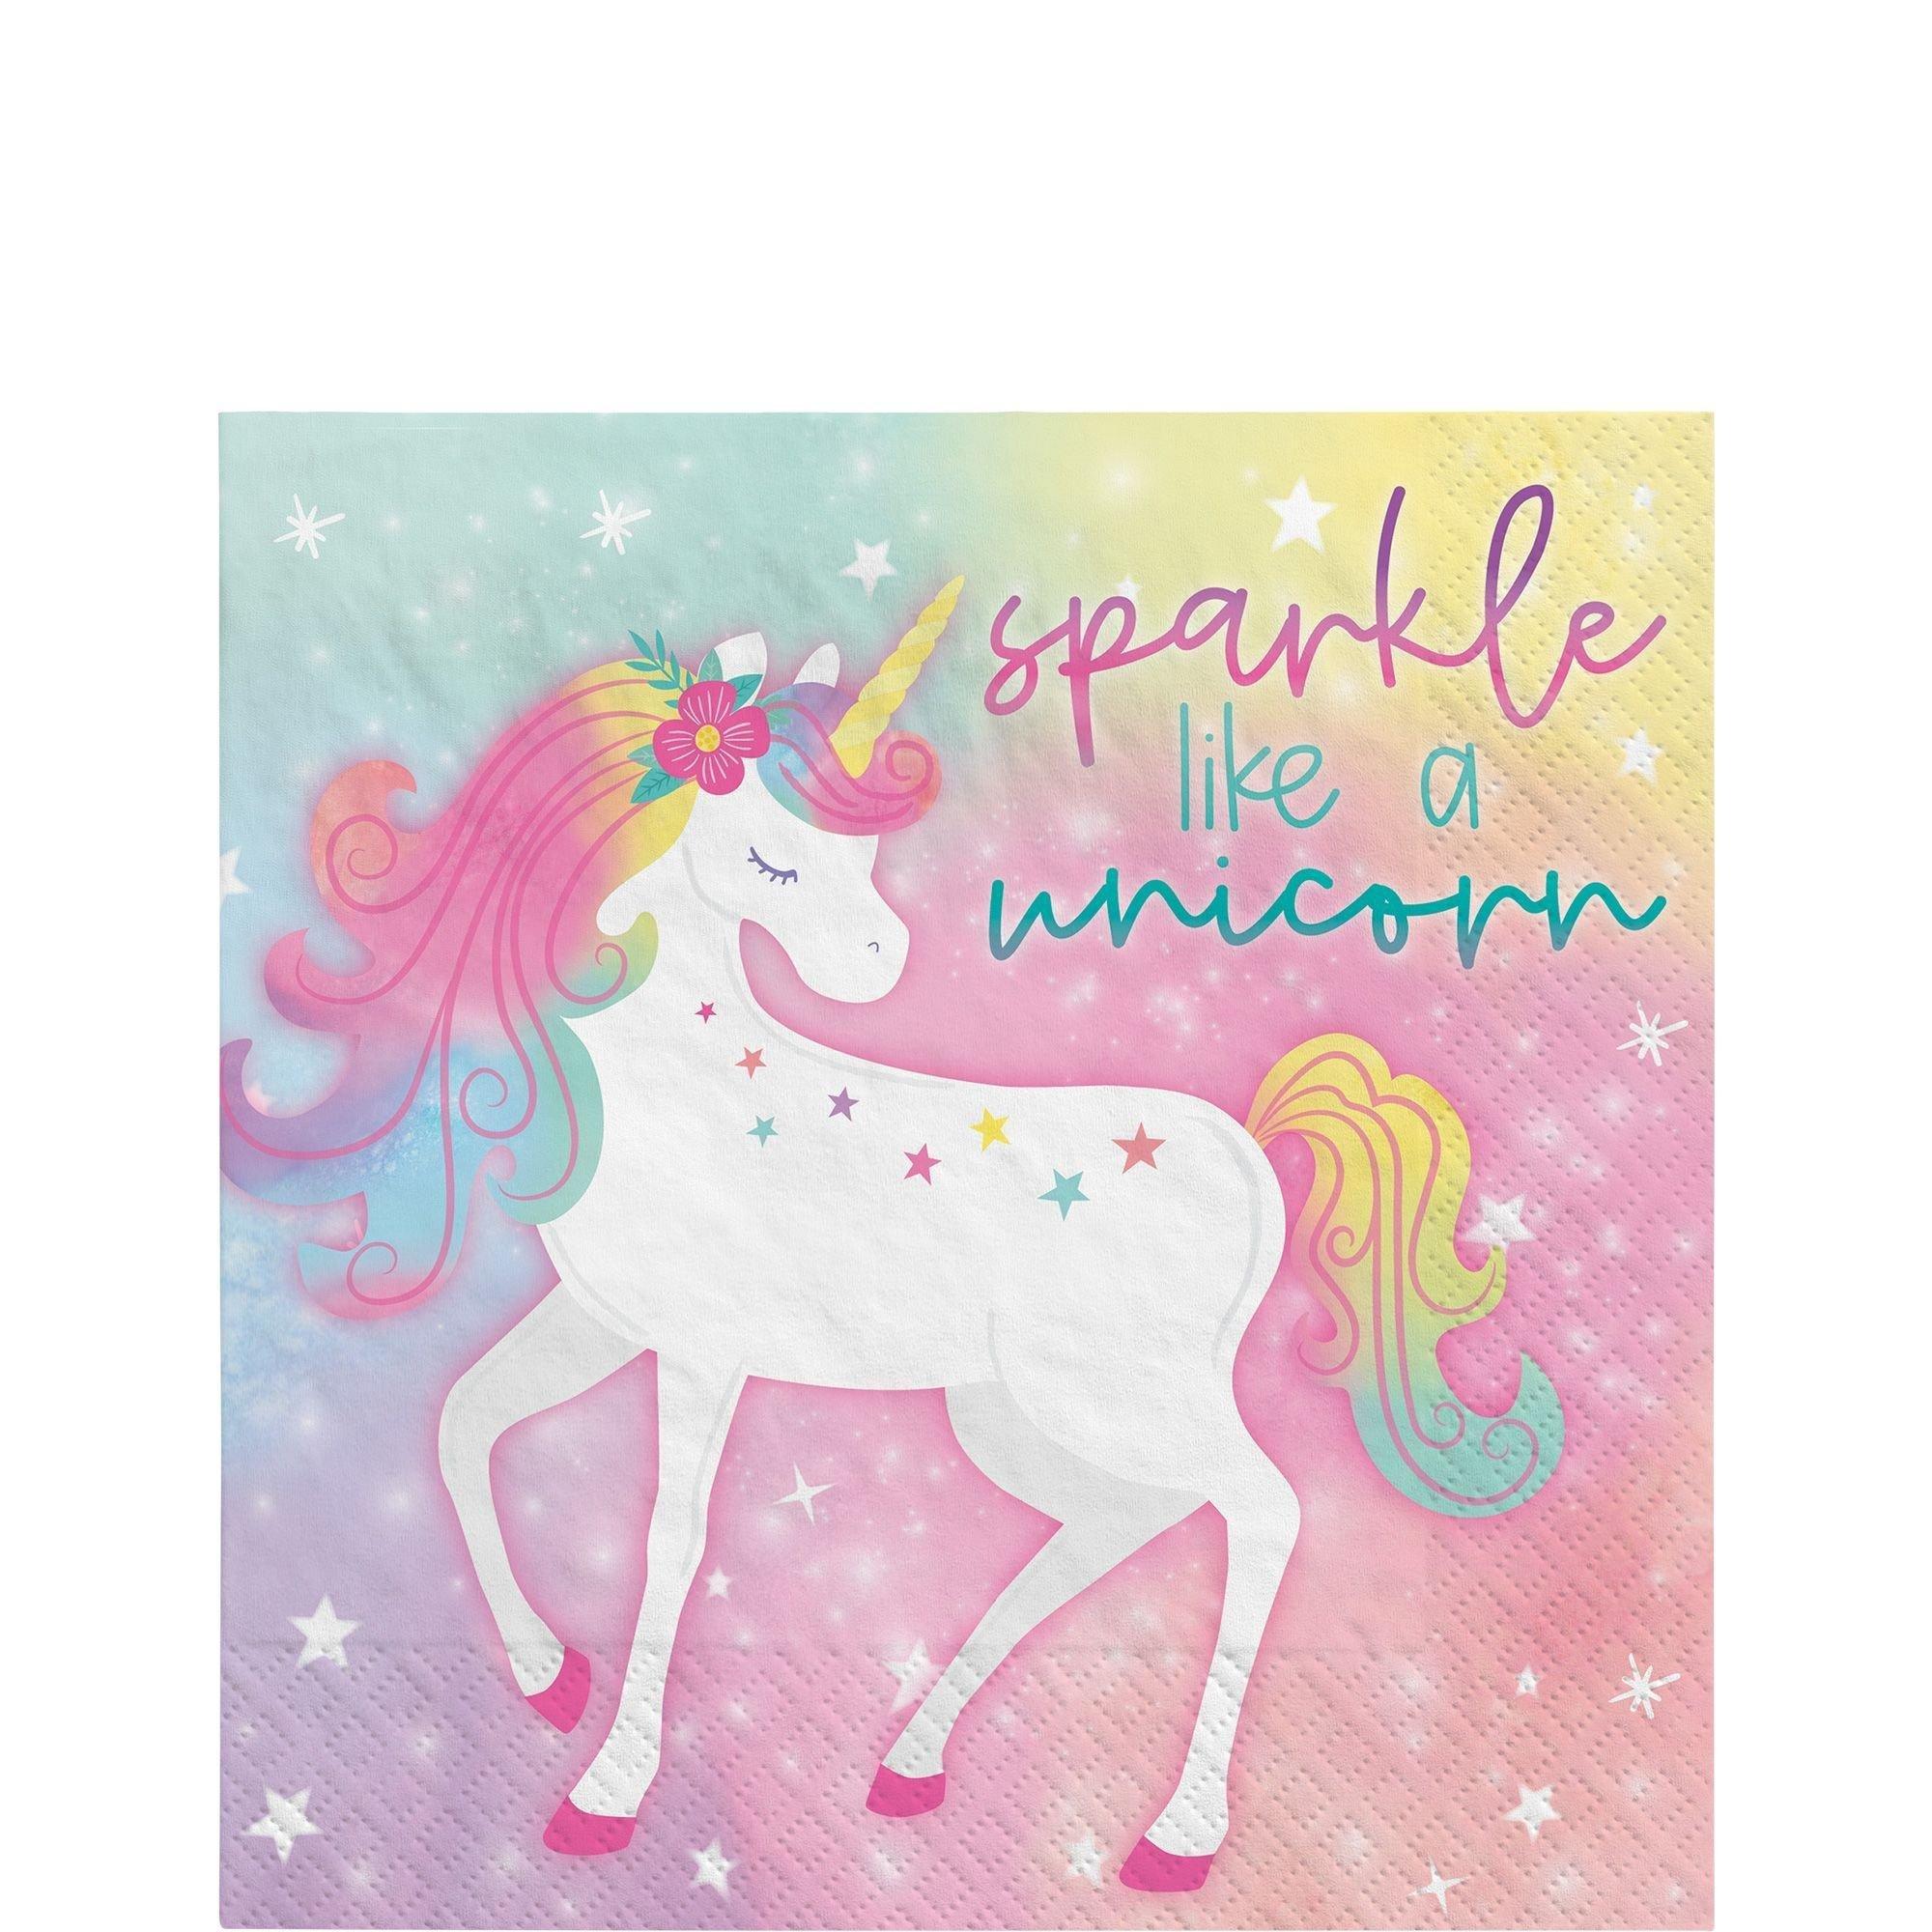 Unicorn Flying Wish Paper Mini Kit — Phoenix Revolution Press